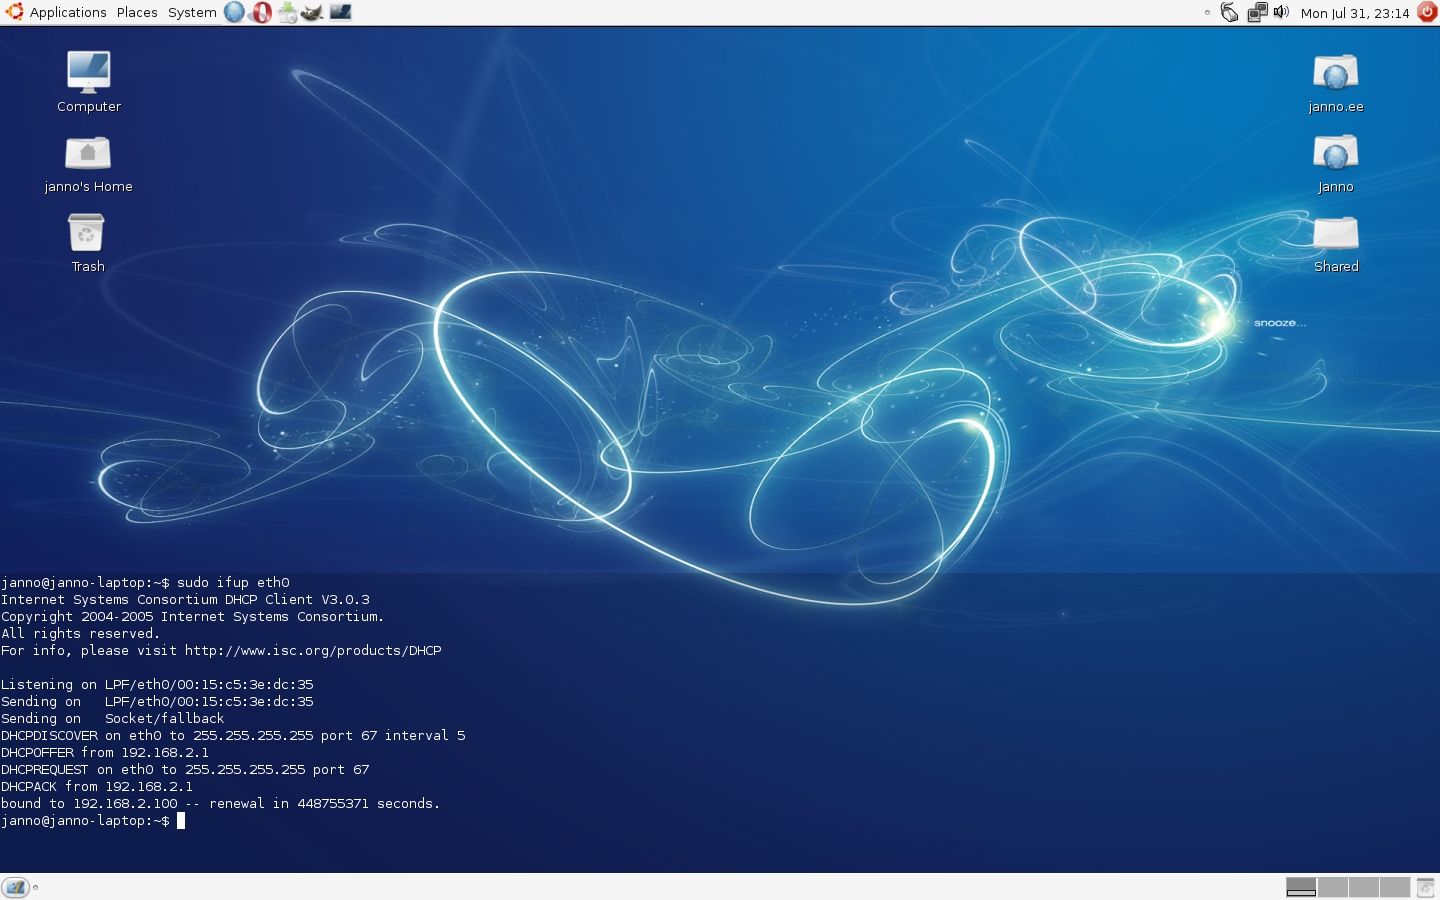 Dell Latitude D620 with Ubuntu by riqo on DeviantArt